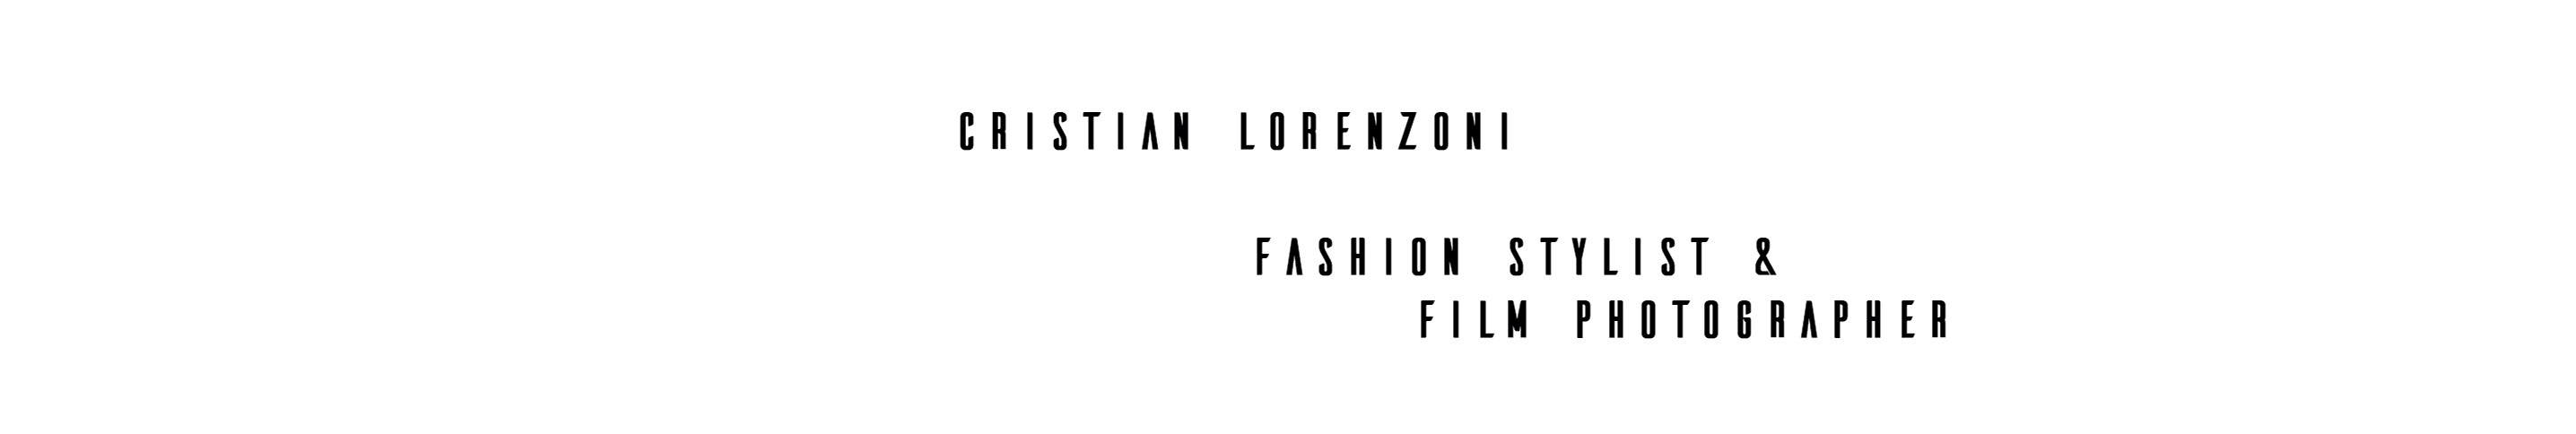 Cristian Lorenzoni's profile banner